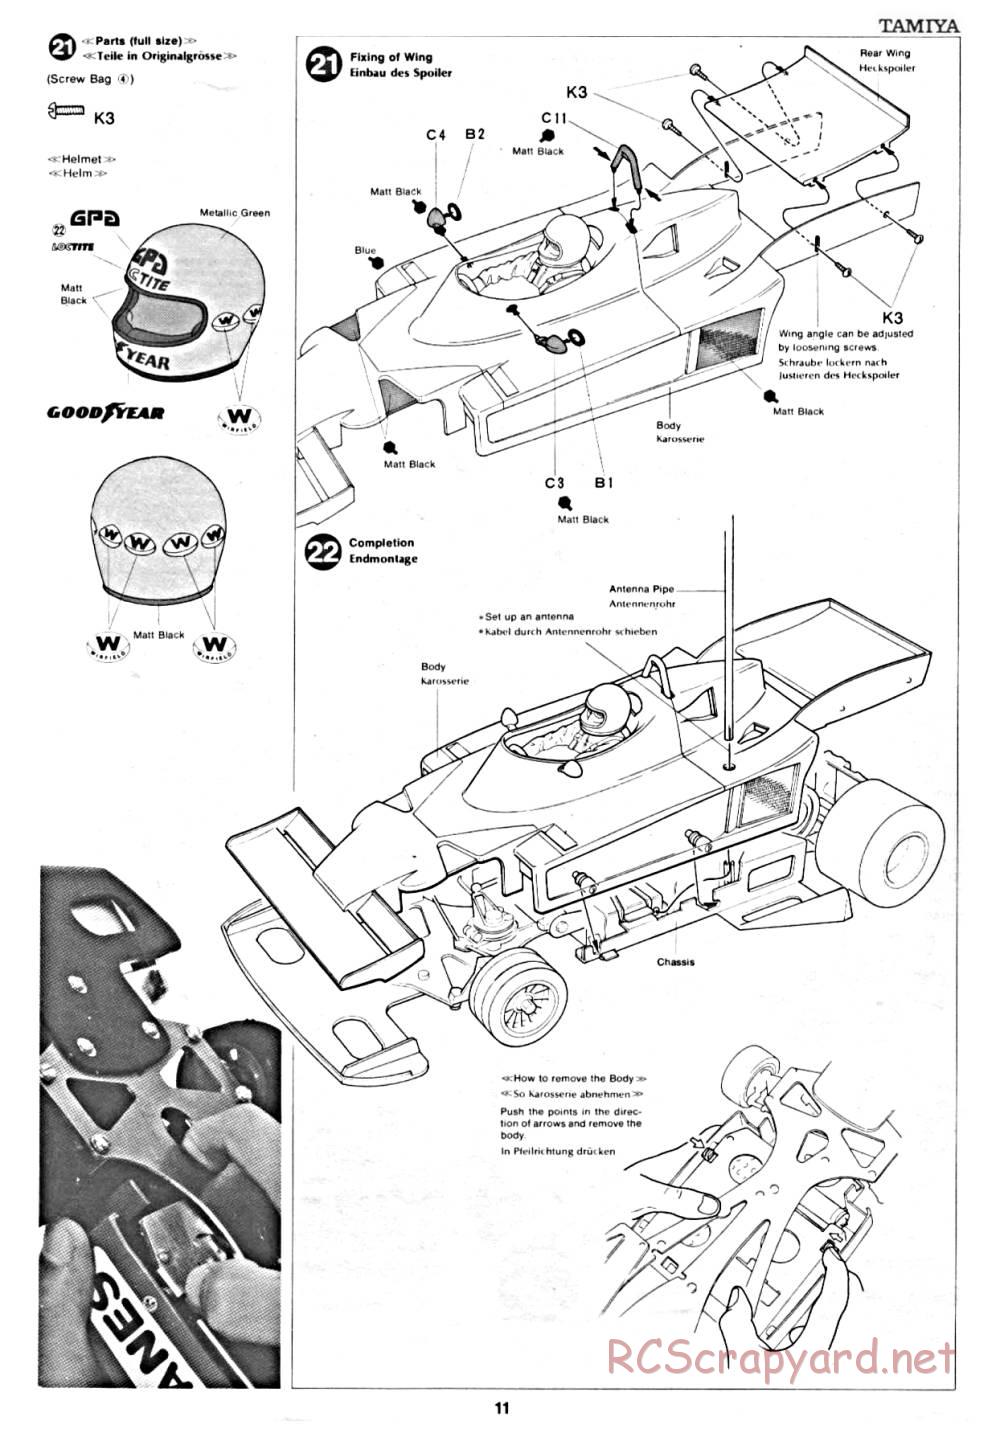 Tamiya - Ligier JS9 Matra (CS) - 58012 - Manual - Page 11